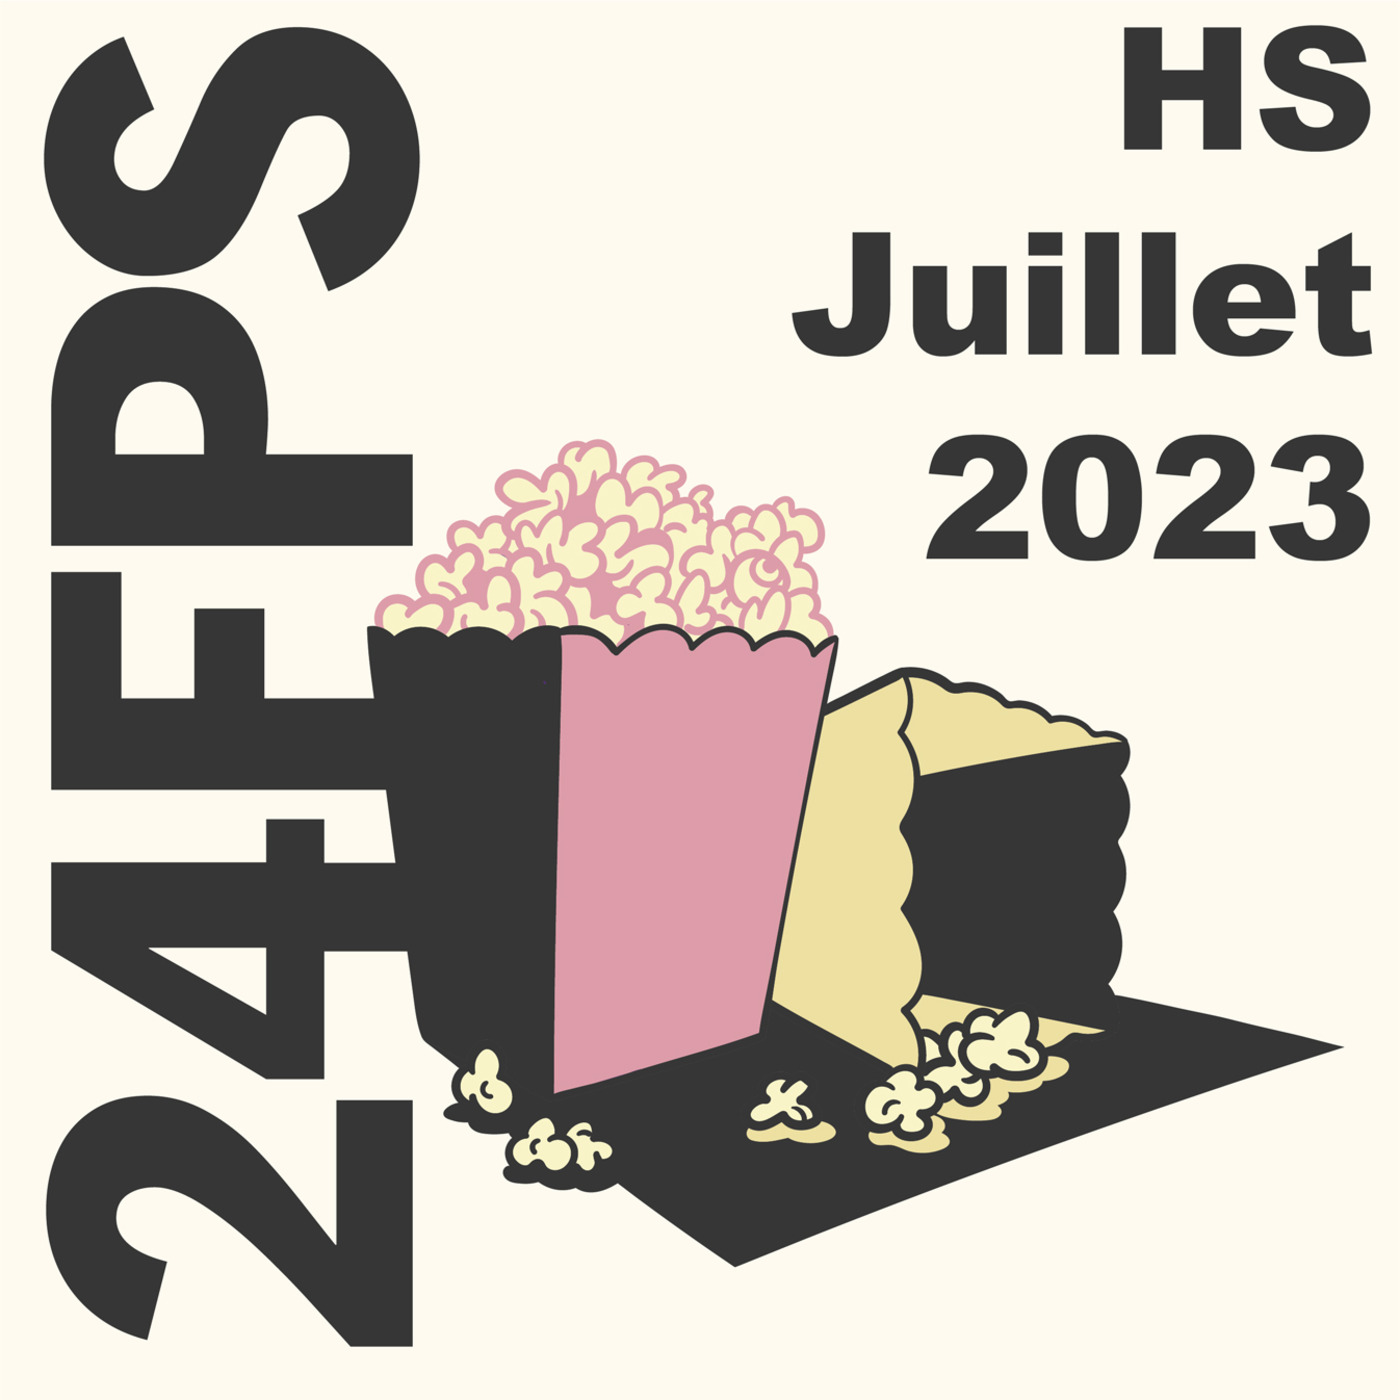 24FPS HS Juillet 2023